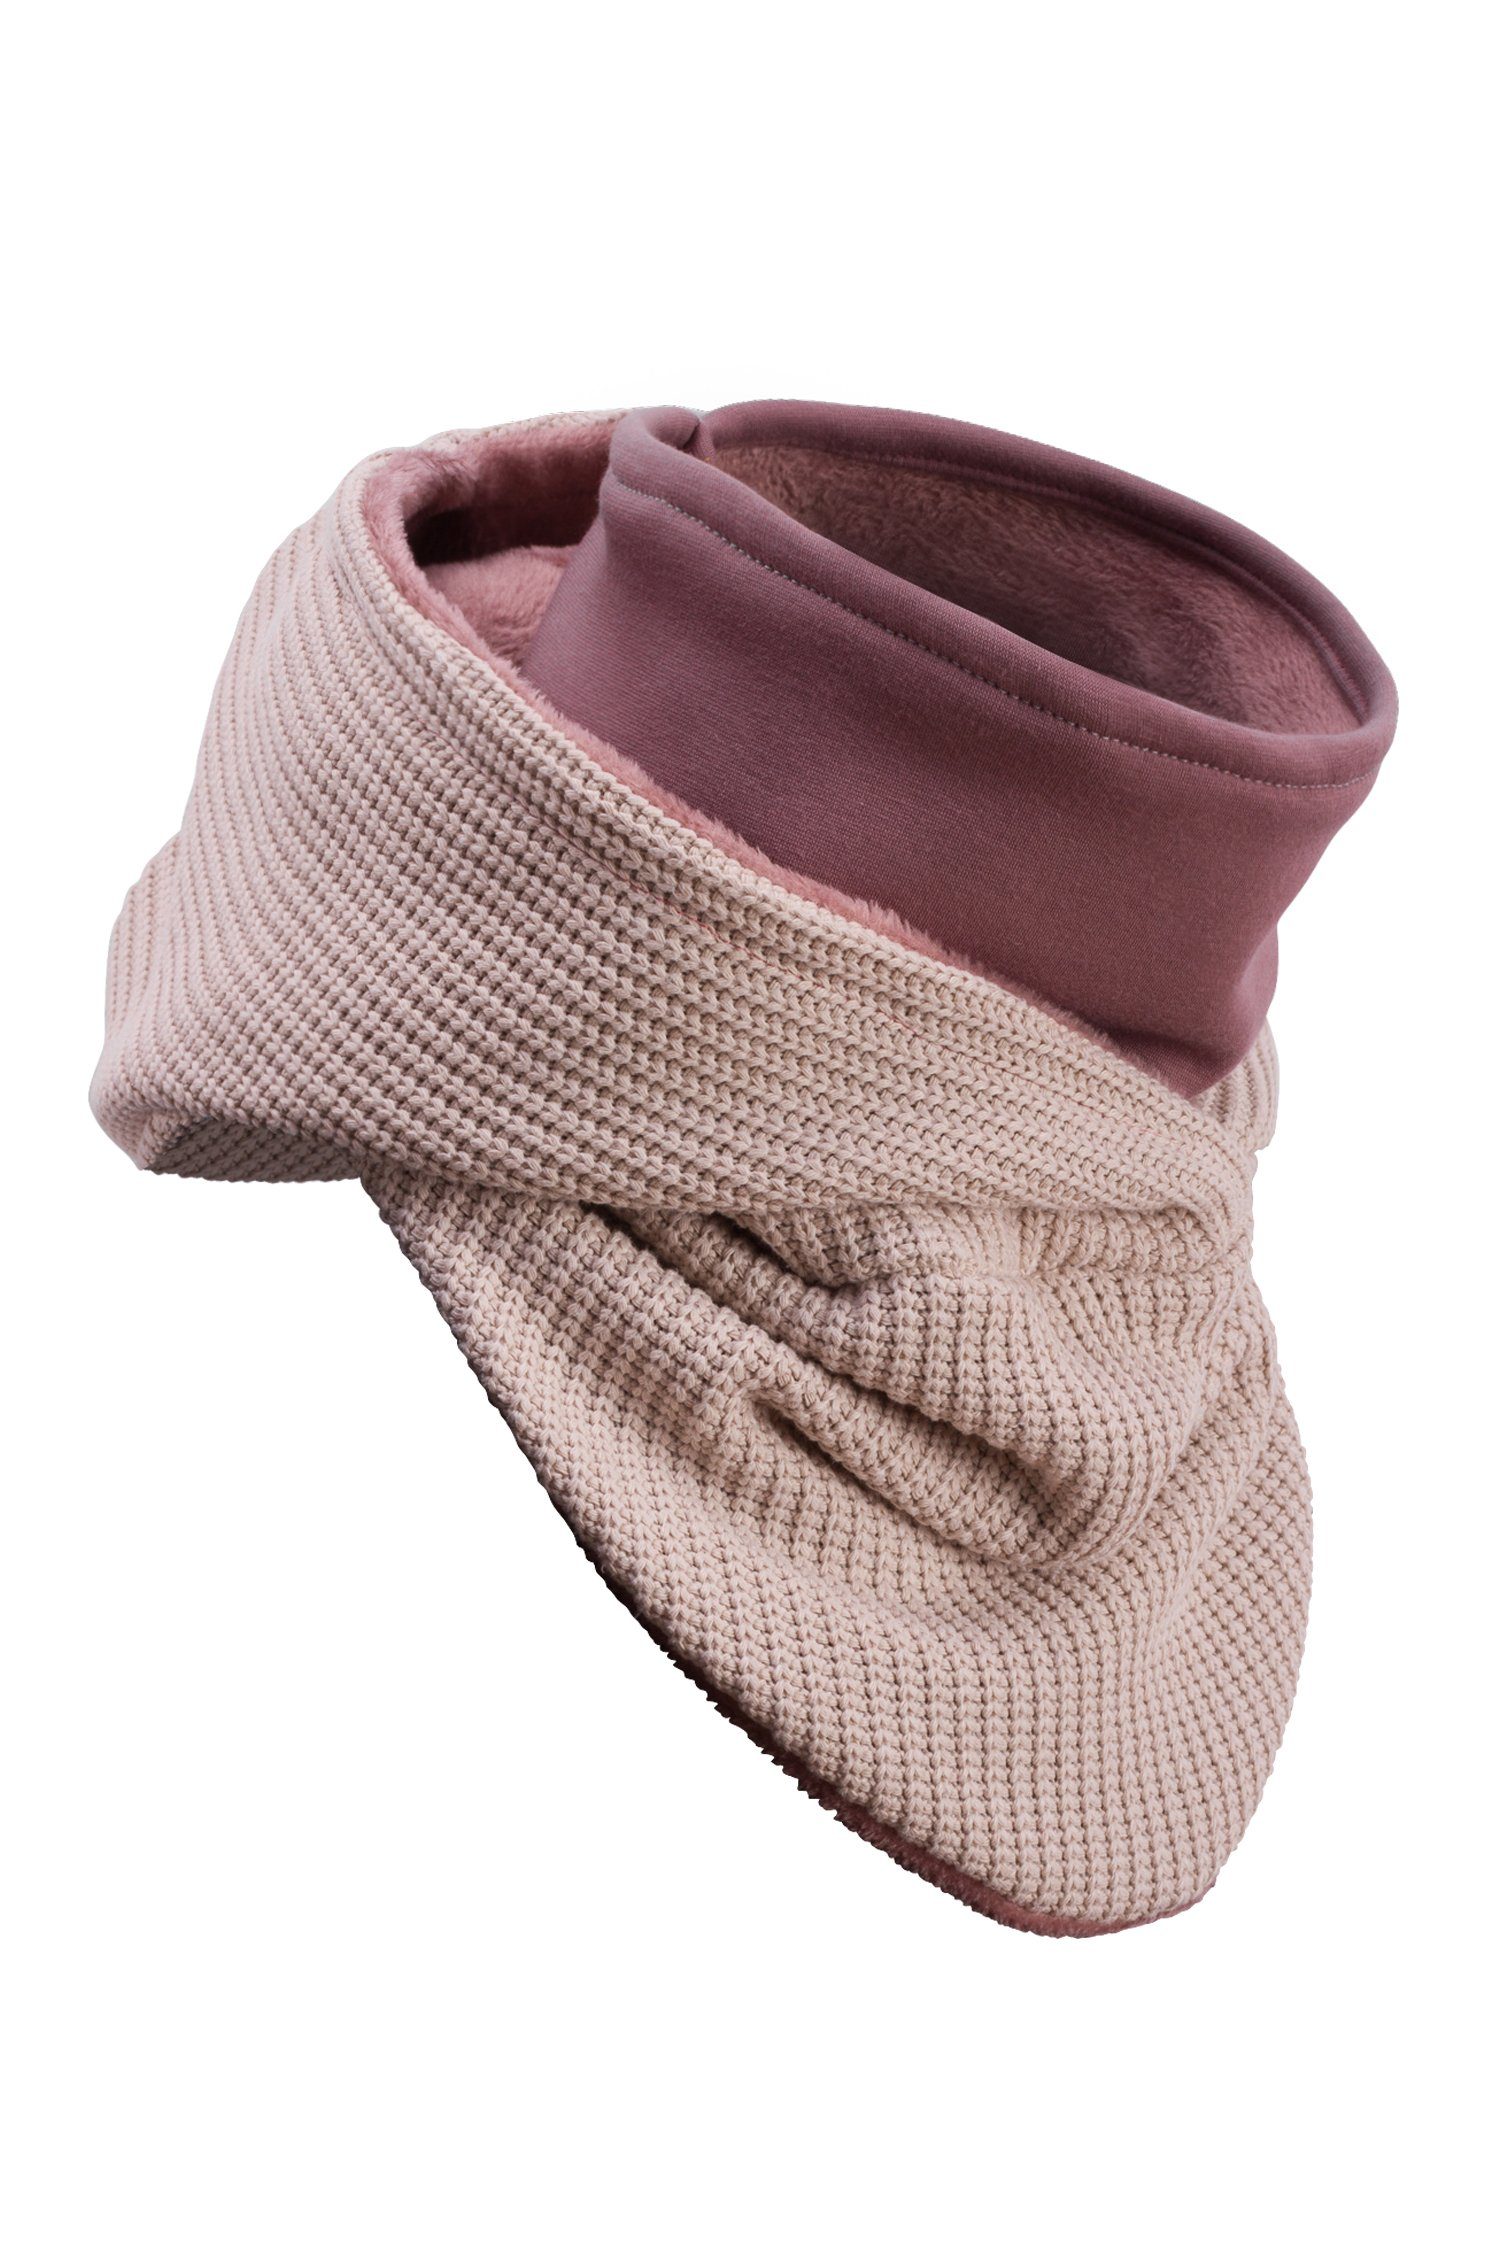 Manufaktur13 Modeschal Knit Hooded Loop - Kapuzenschal, Schal, Strickschal, mit integriertem Windbreaker Tusken